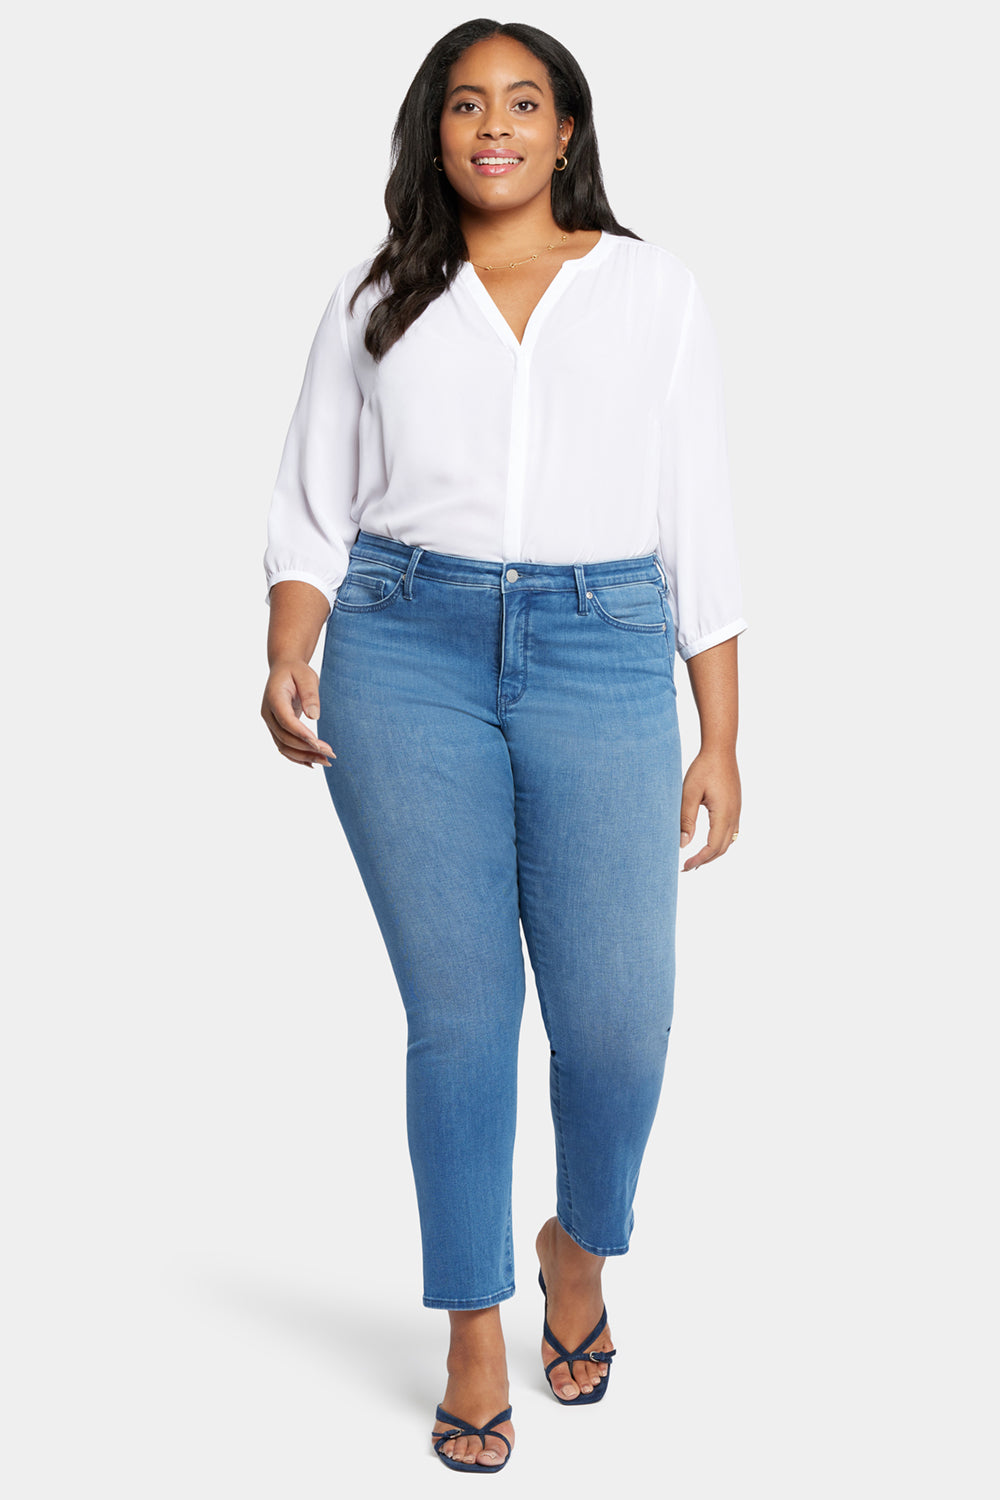 NYDJ Le Silhouette Sheri Slim Jeans In Plus Size  - Stunning